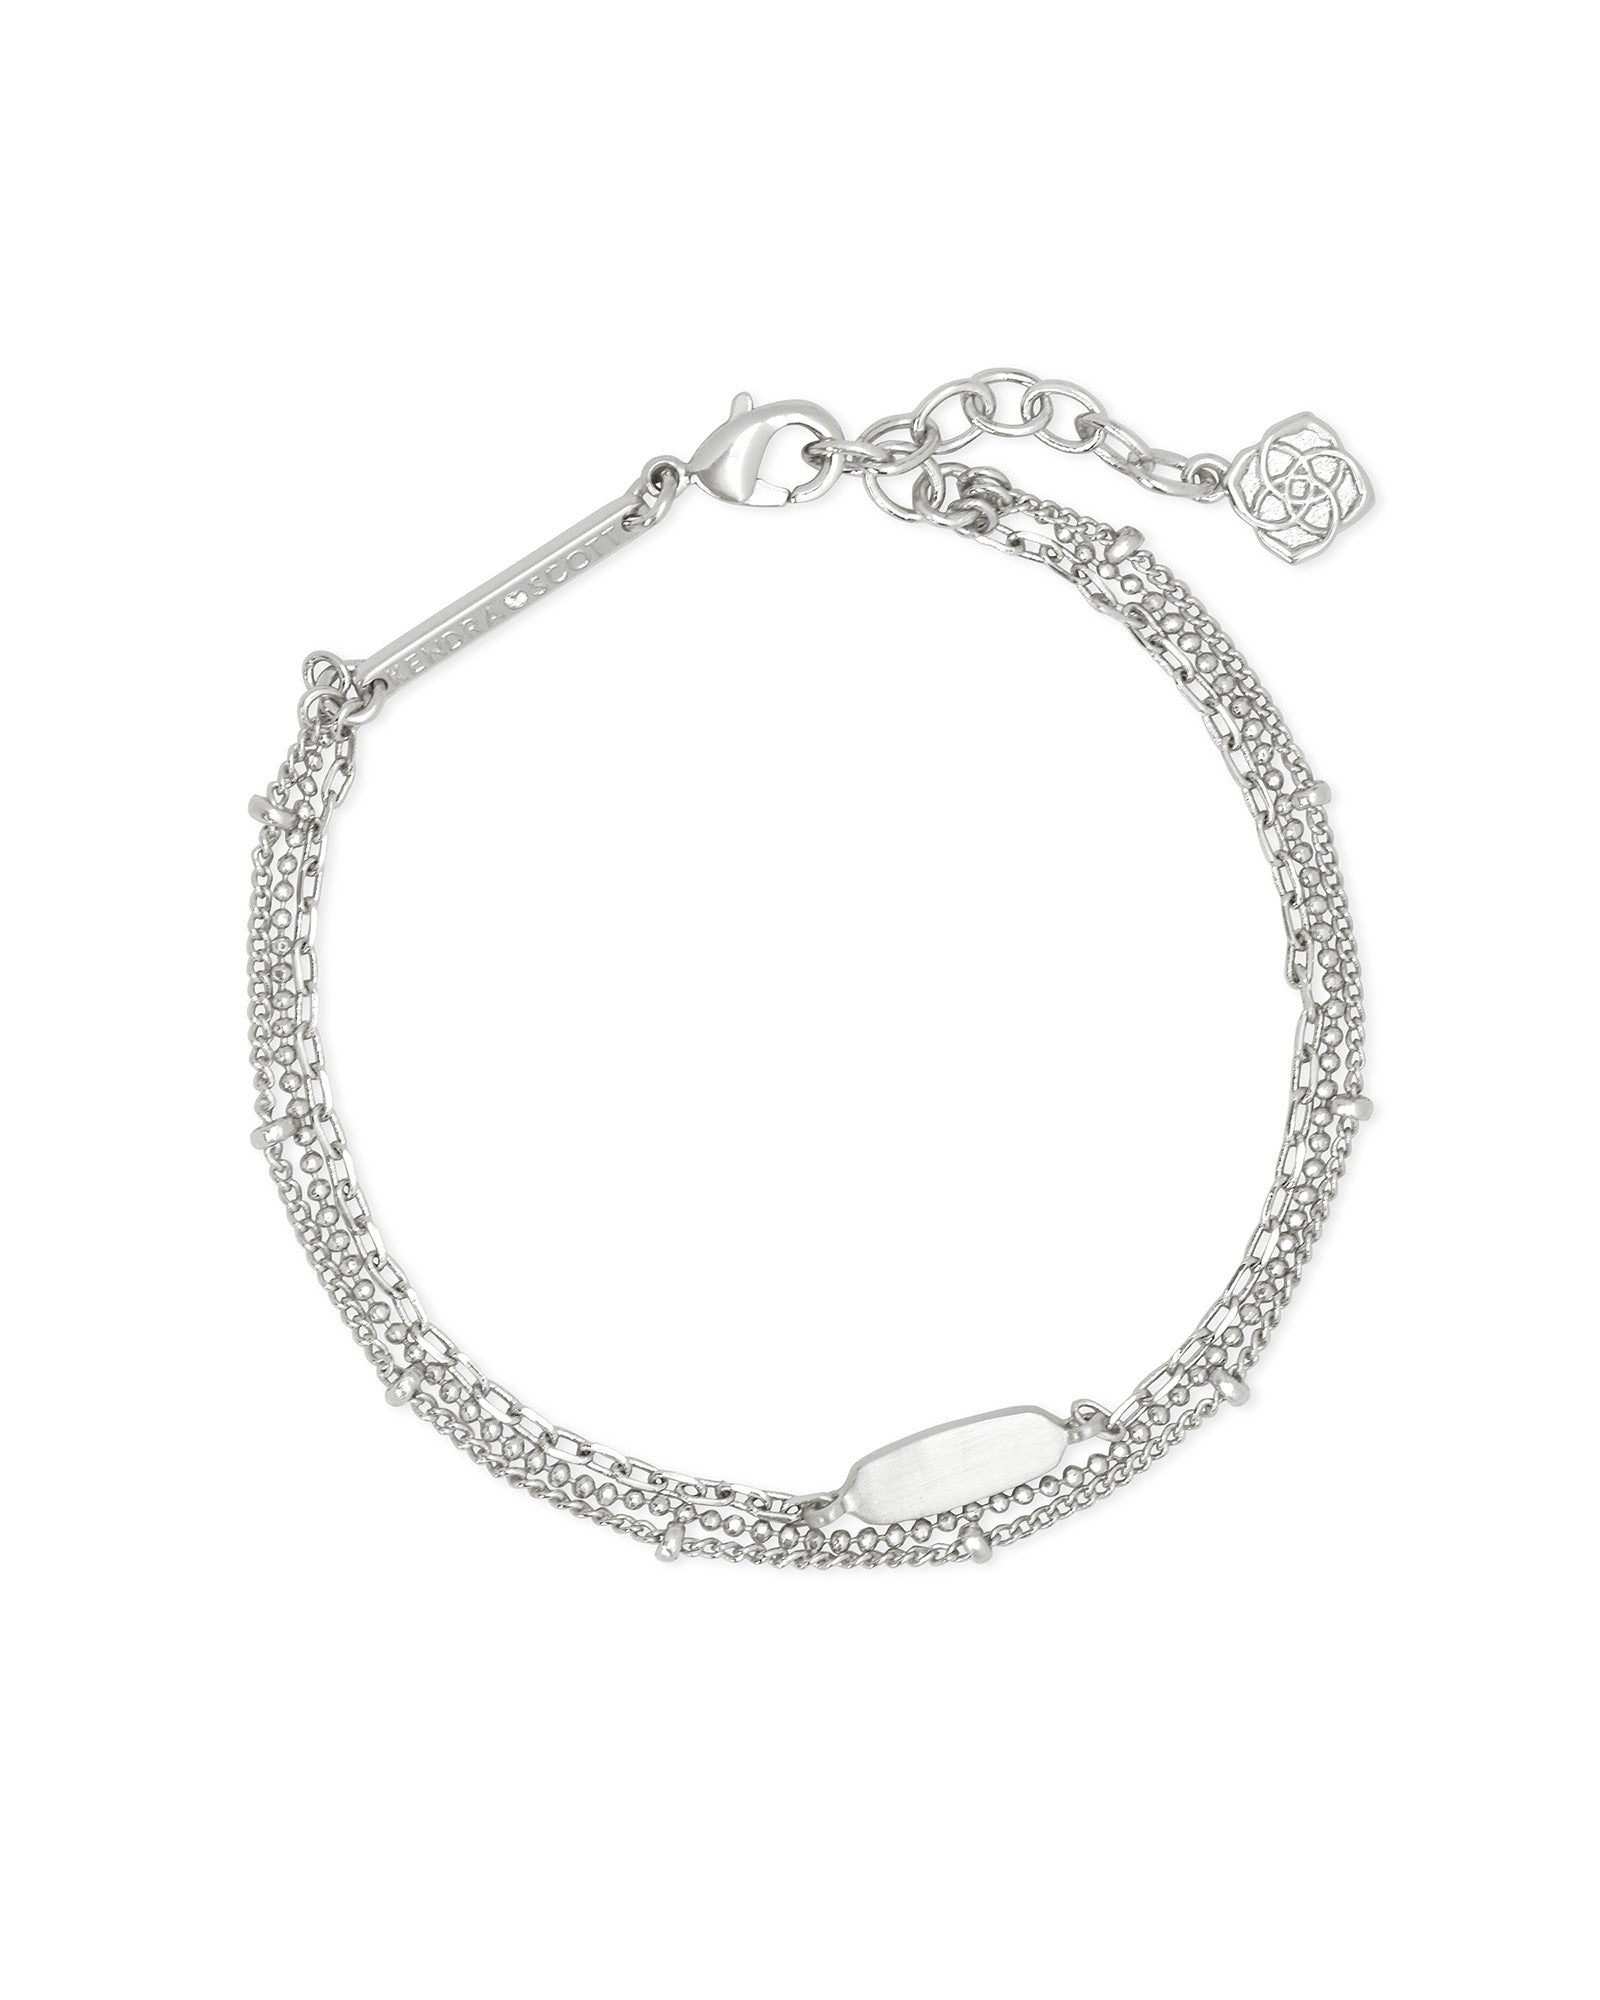 Fern Multi Strand Bracelet in Bright Silver Metal